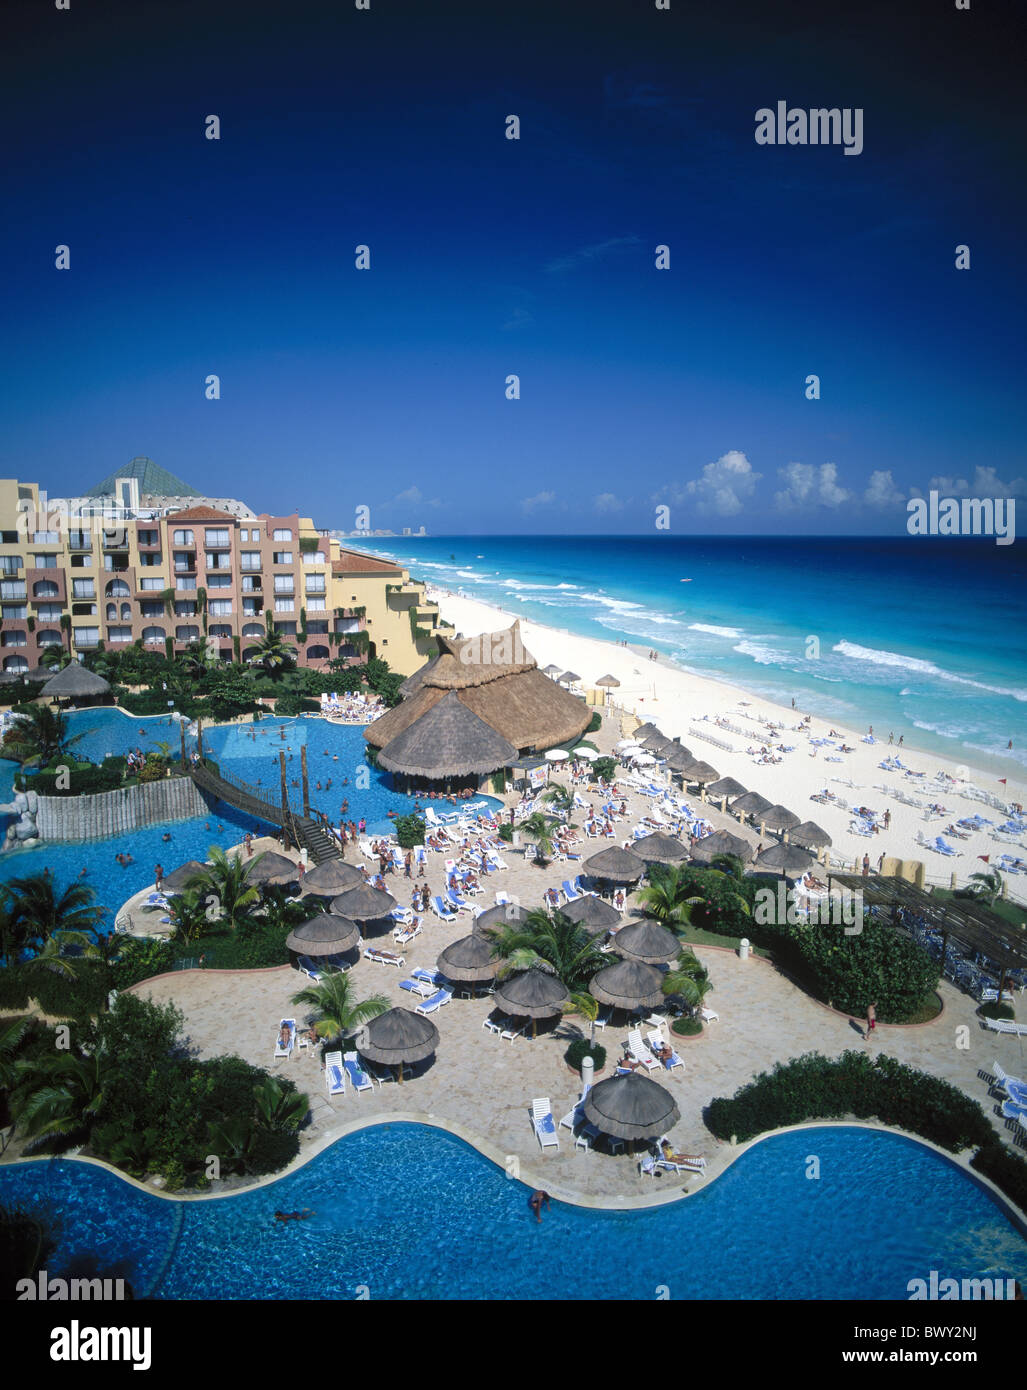 Fiesta Americana Cancun Resort Hotel Mexique plage mer piscine extérieure Yucatan Banque D'Images